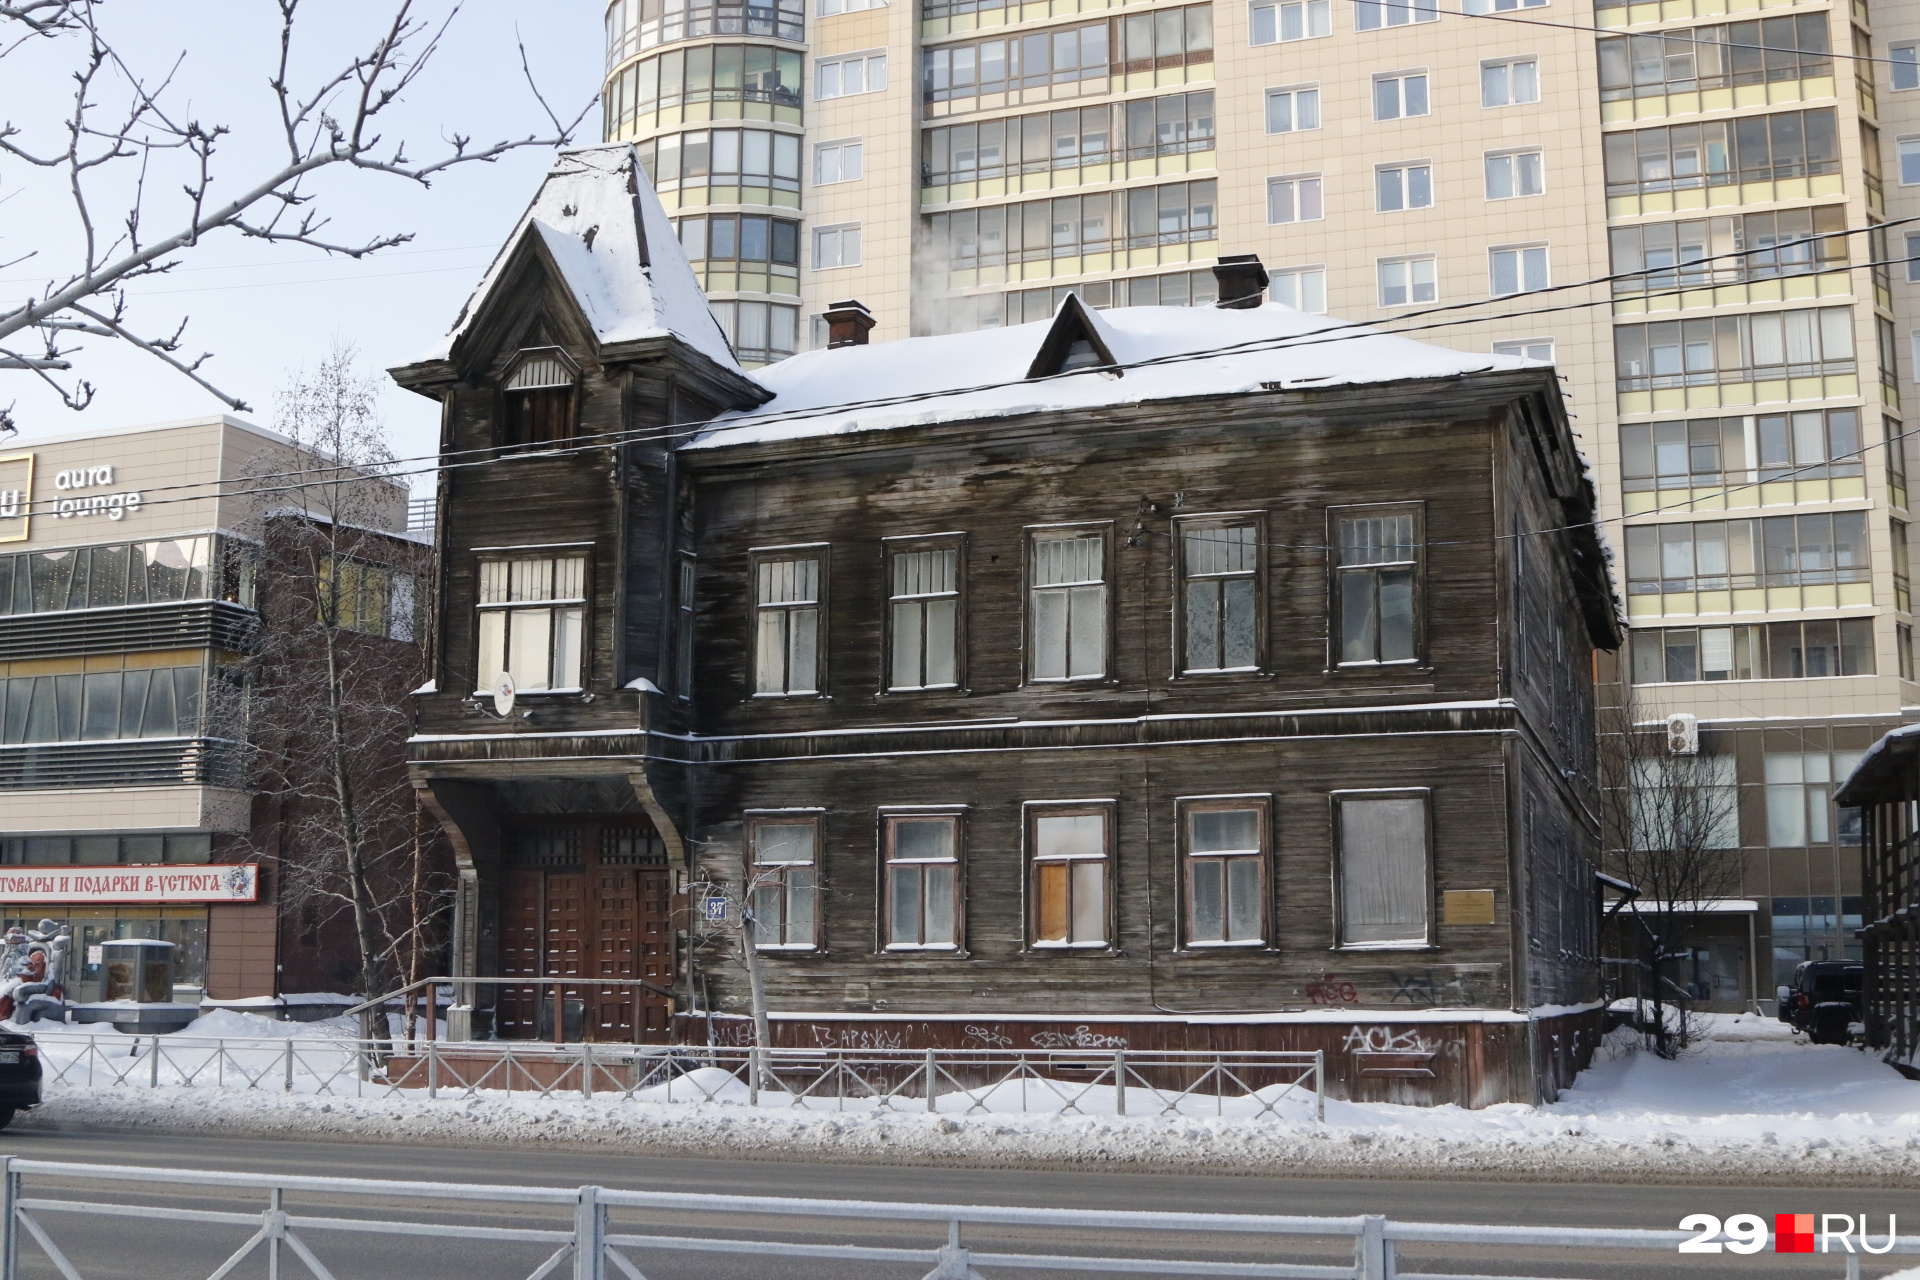 Дом купца Овчинникова построен в стиле модерн в 1911 году